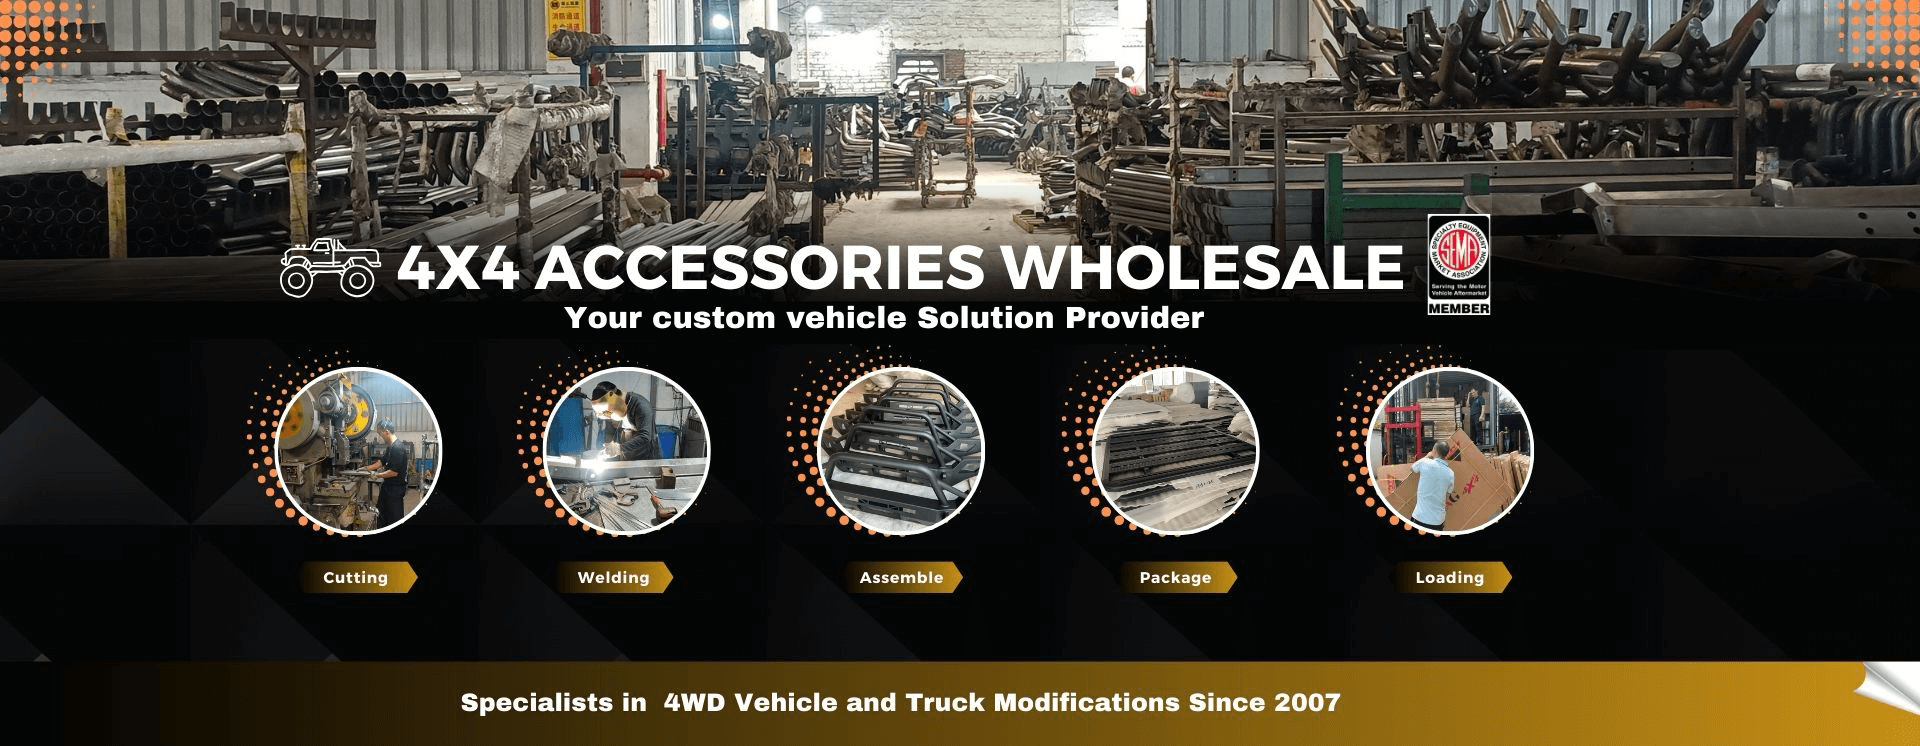 4x4 accessories wholesaler